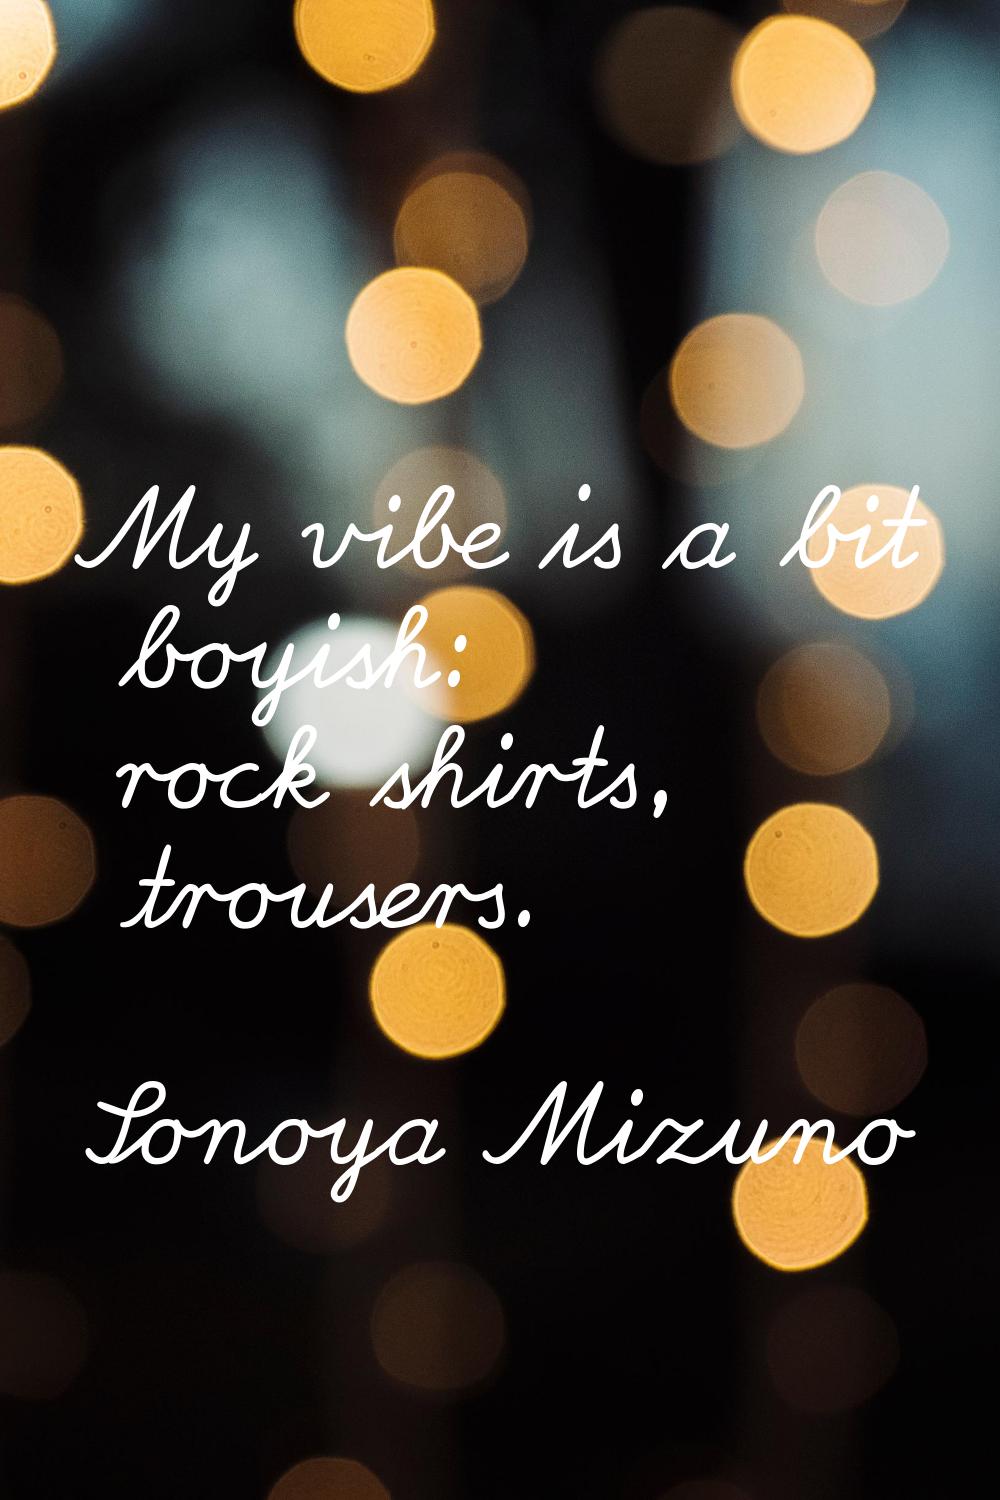 My vibe is a bit boyish: rock shirts, trousers.